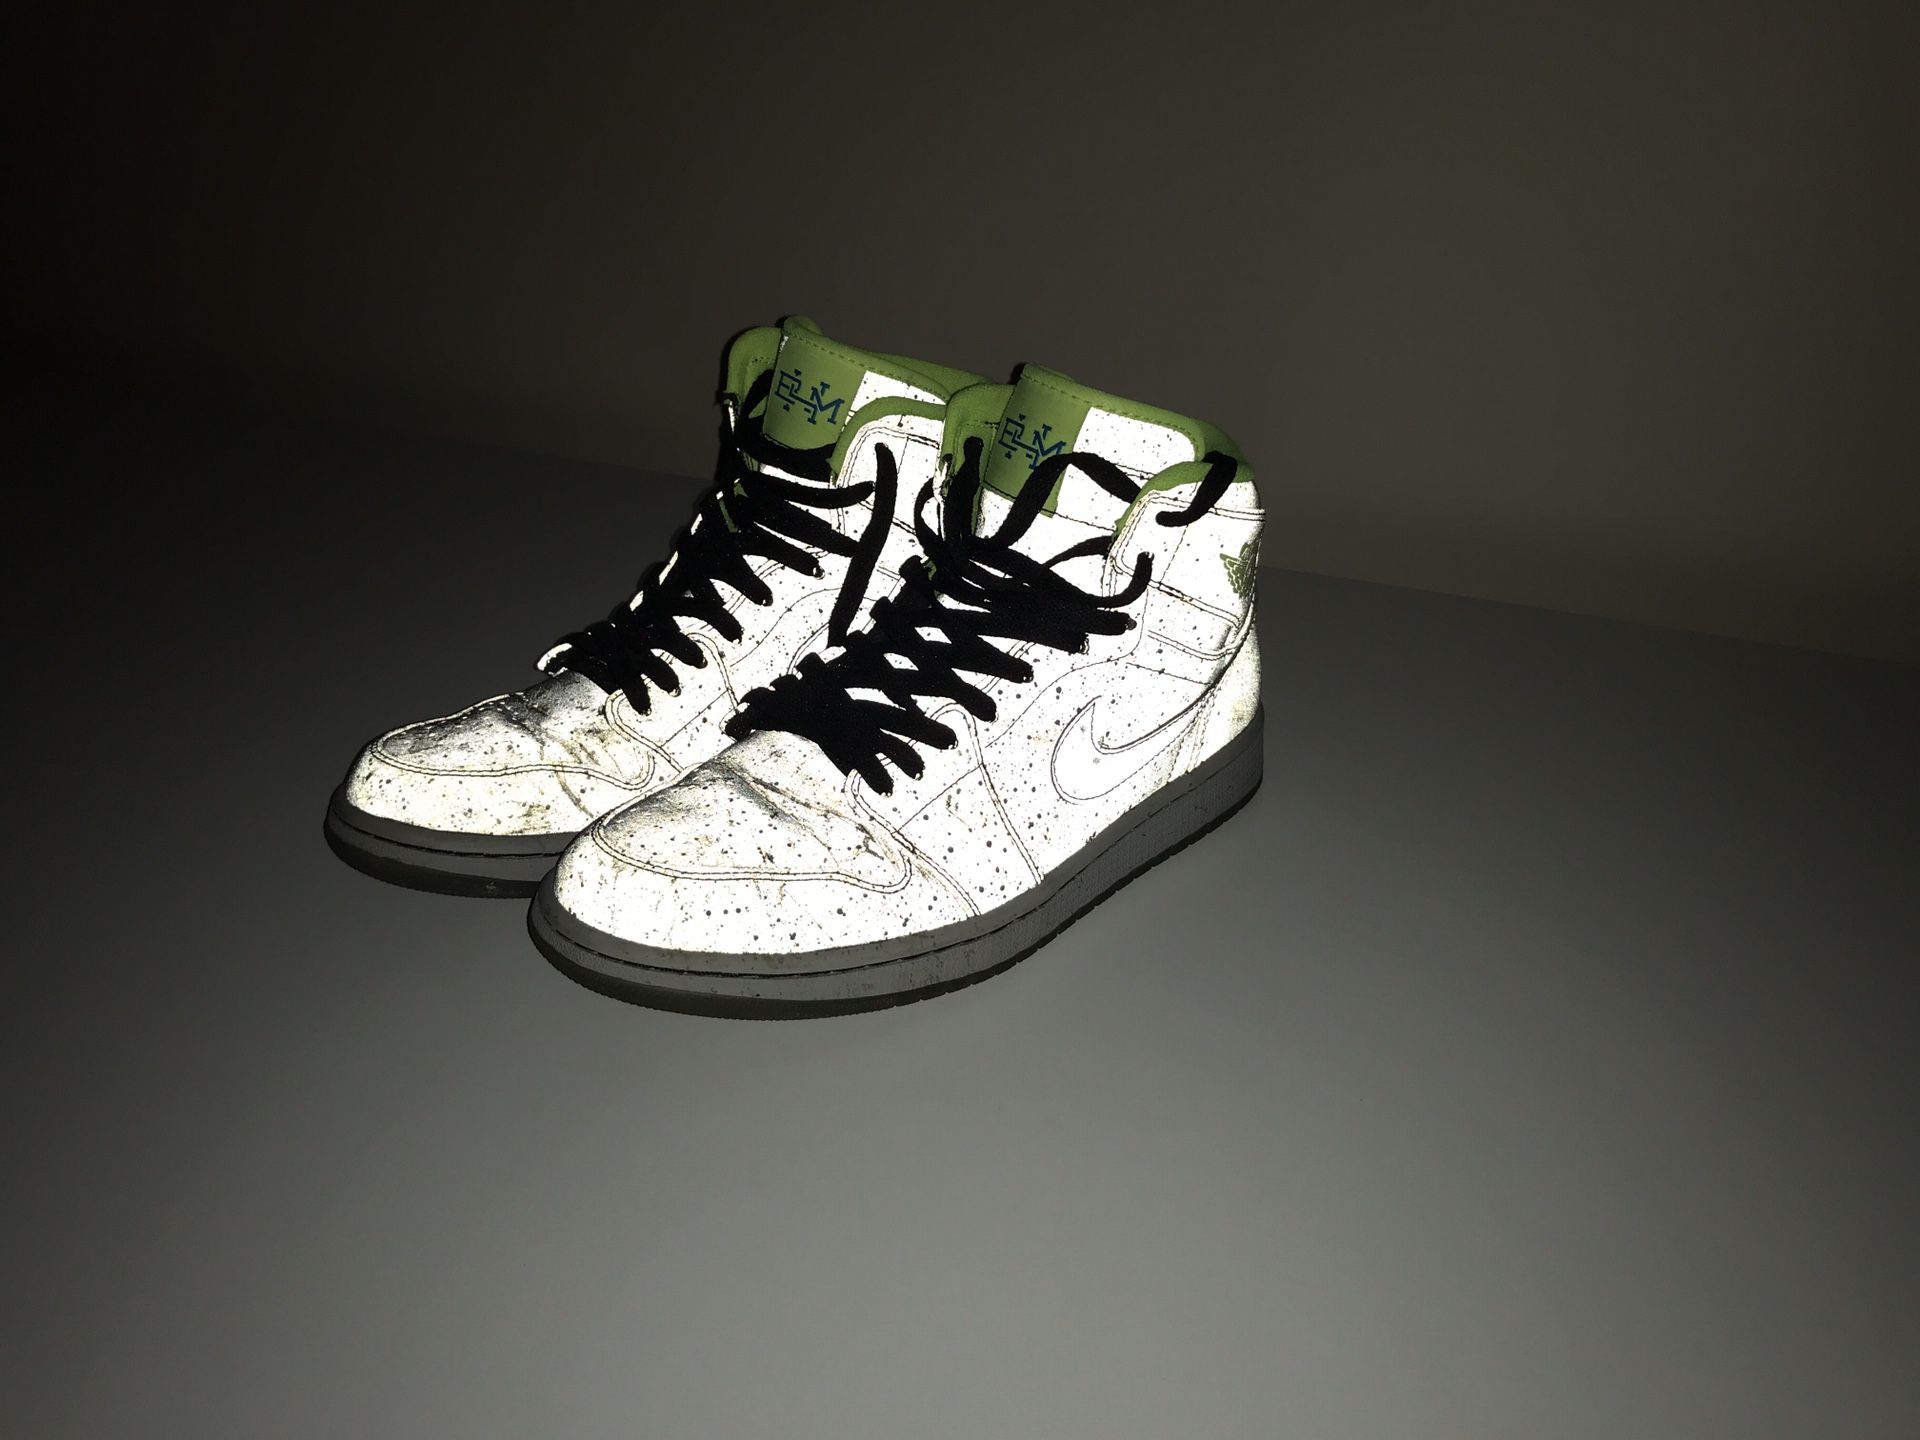 Men’s Nike Air Jordan 1 BHM Reflective High top shoes - Size 9.5